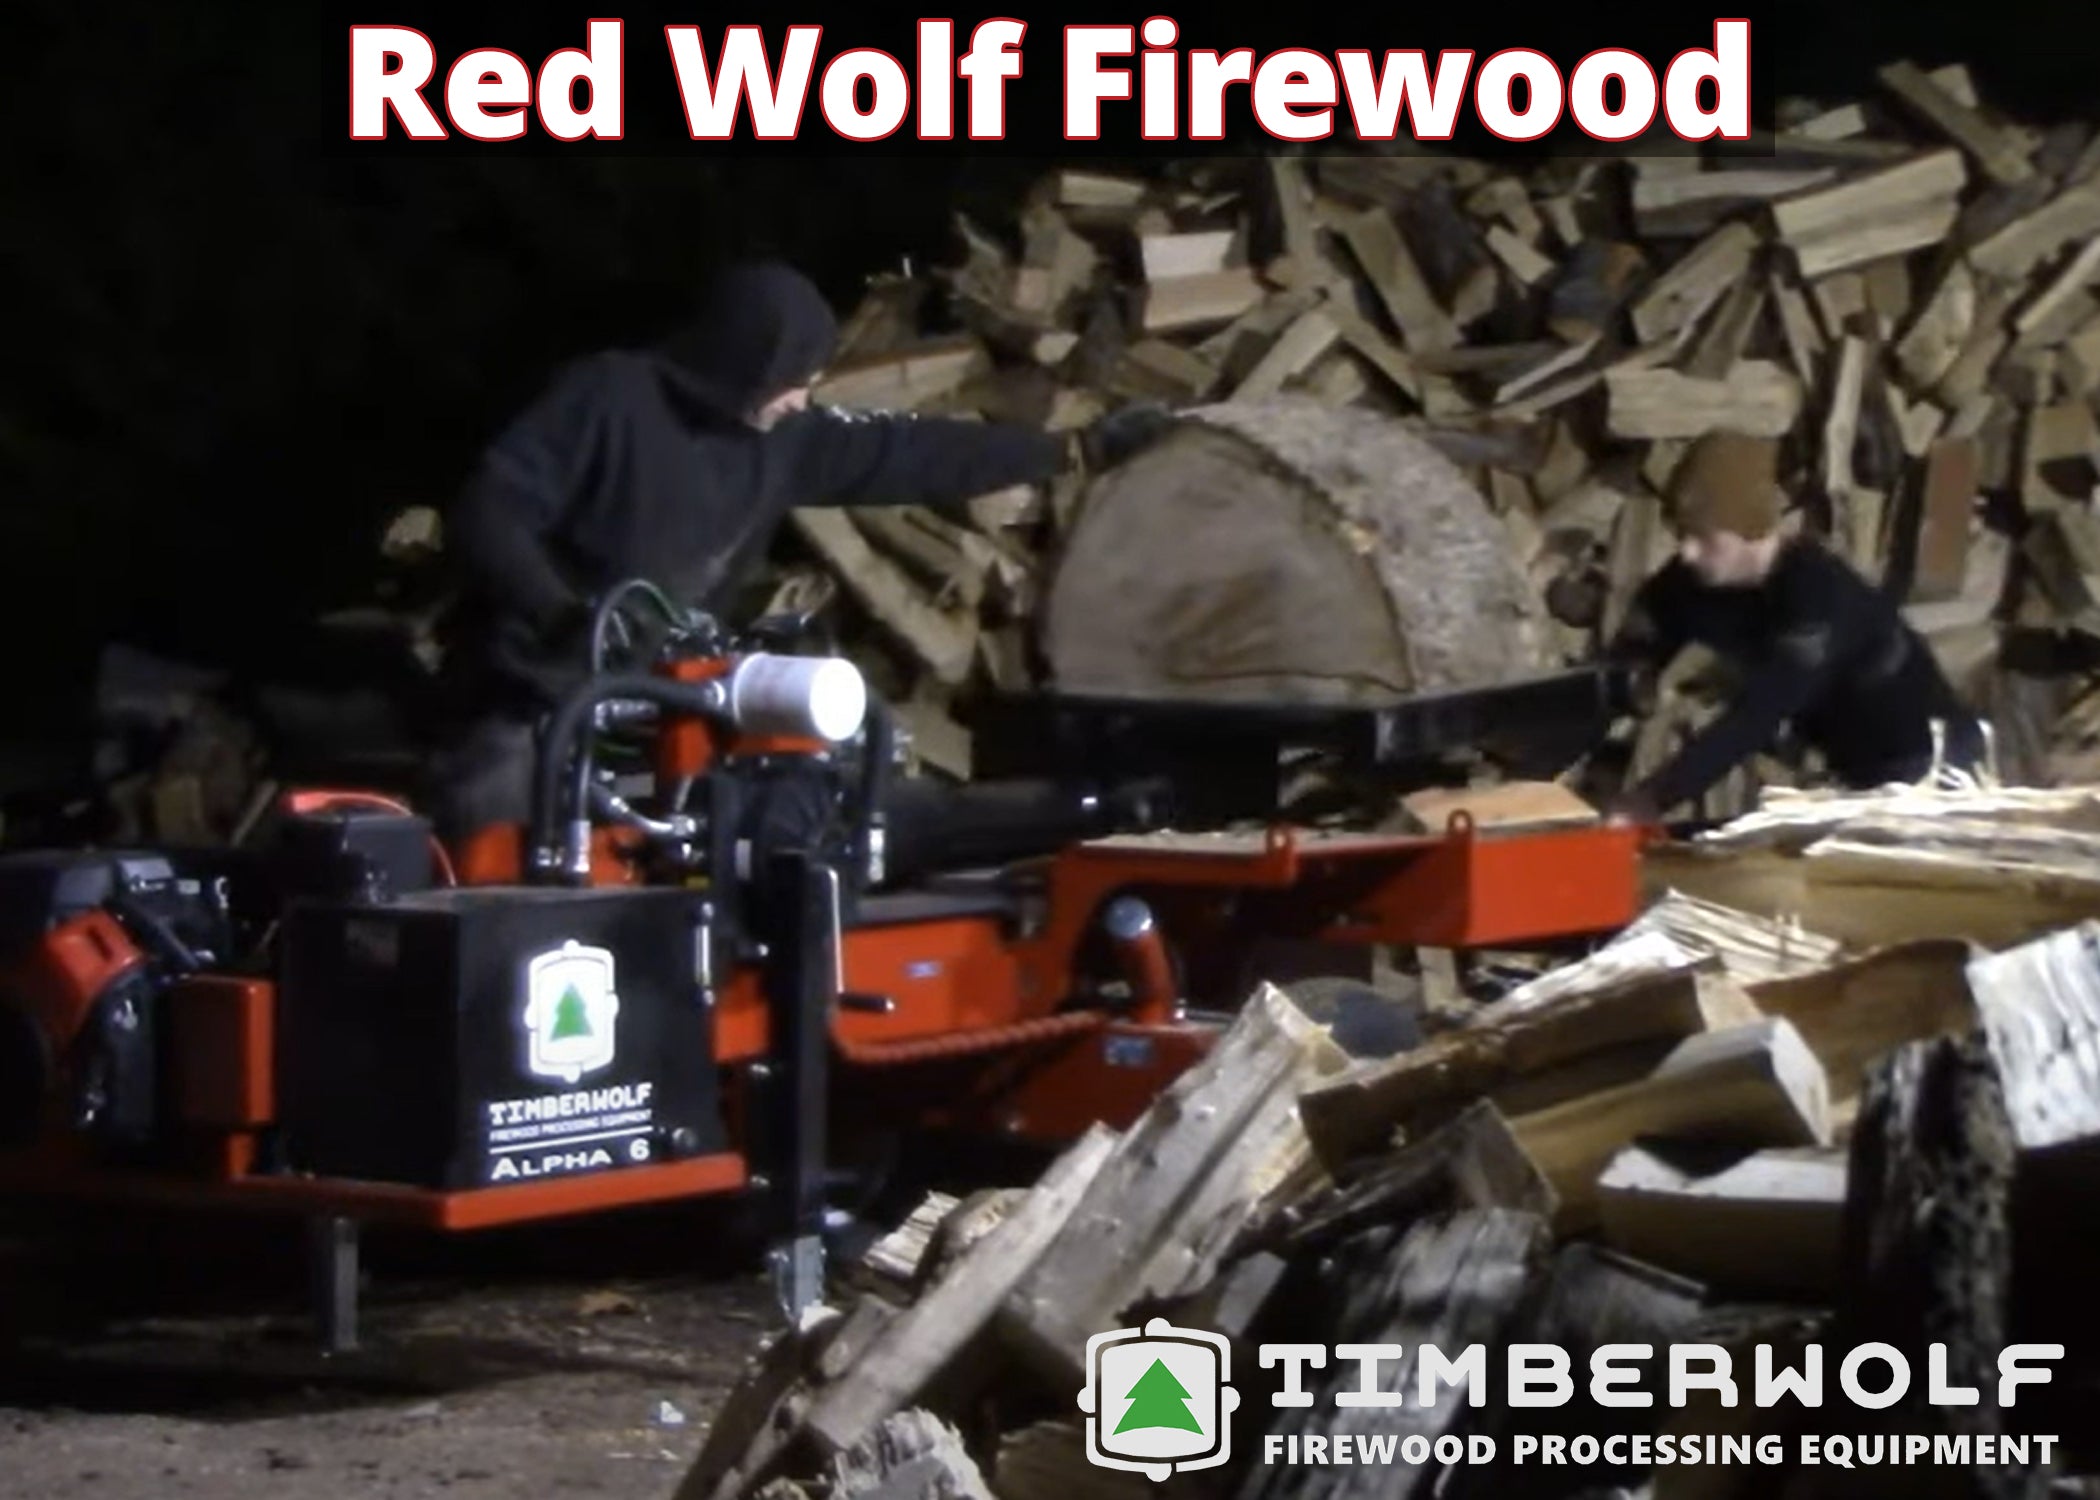 Load video: Red Wolf Firewood x Timberwolf